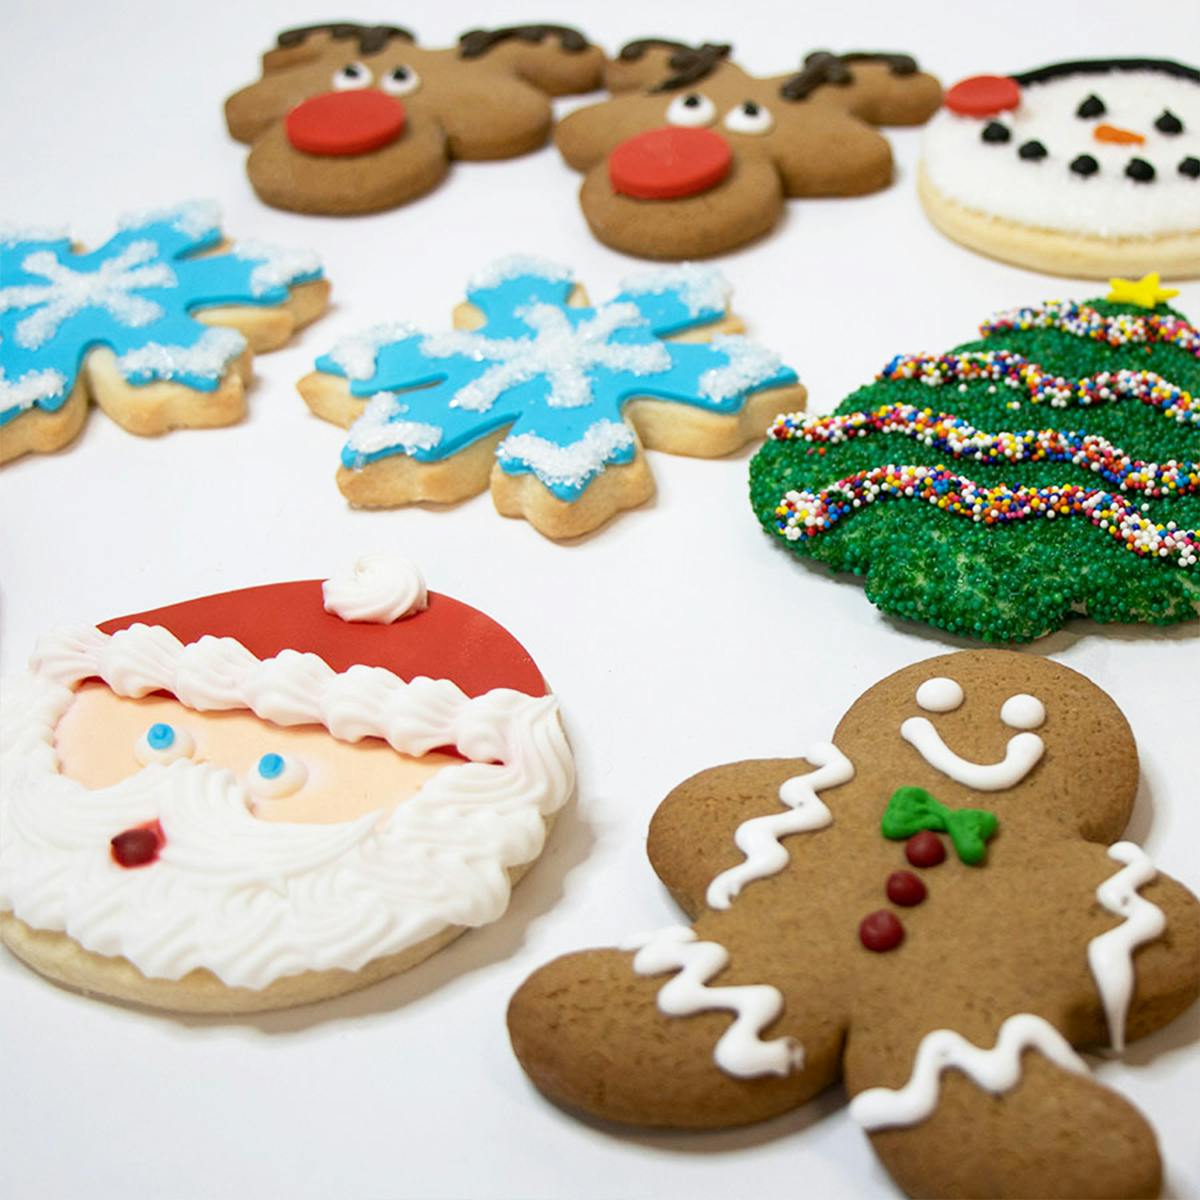 https://goldbelly.imgix.net/uploads/showcase_media_asset/image/182688/Carlos-Bakery-Christmas-Cookies-2.jpg?ixlib=rails-3.0.2